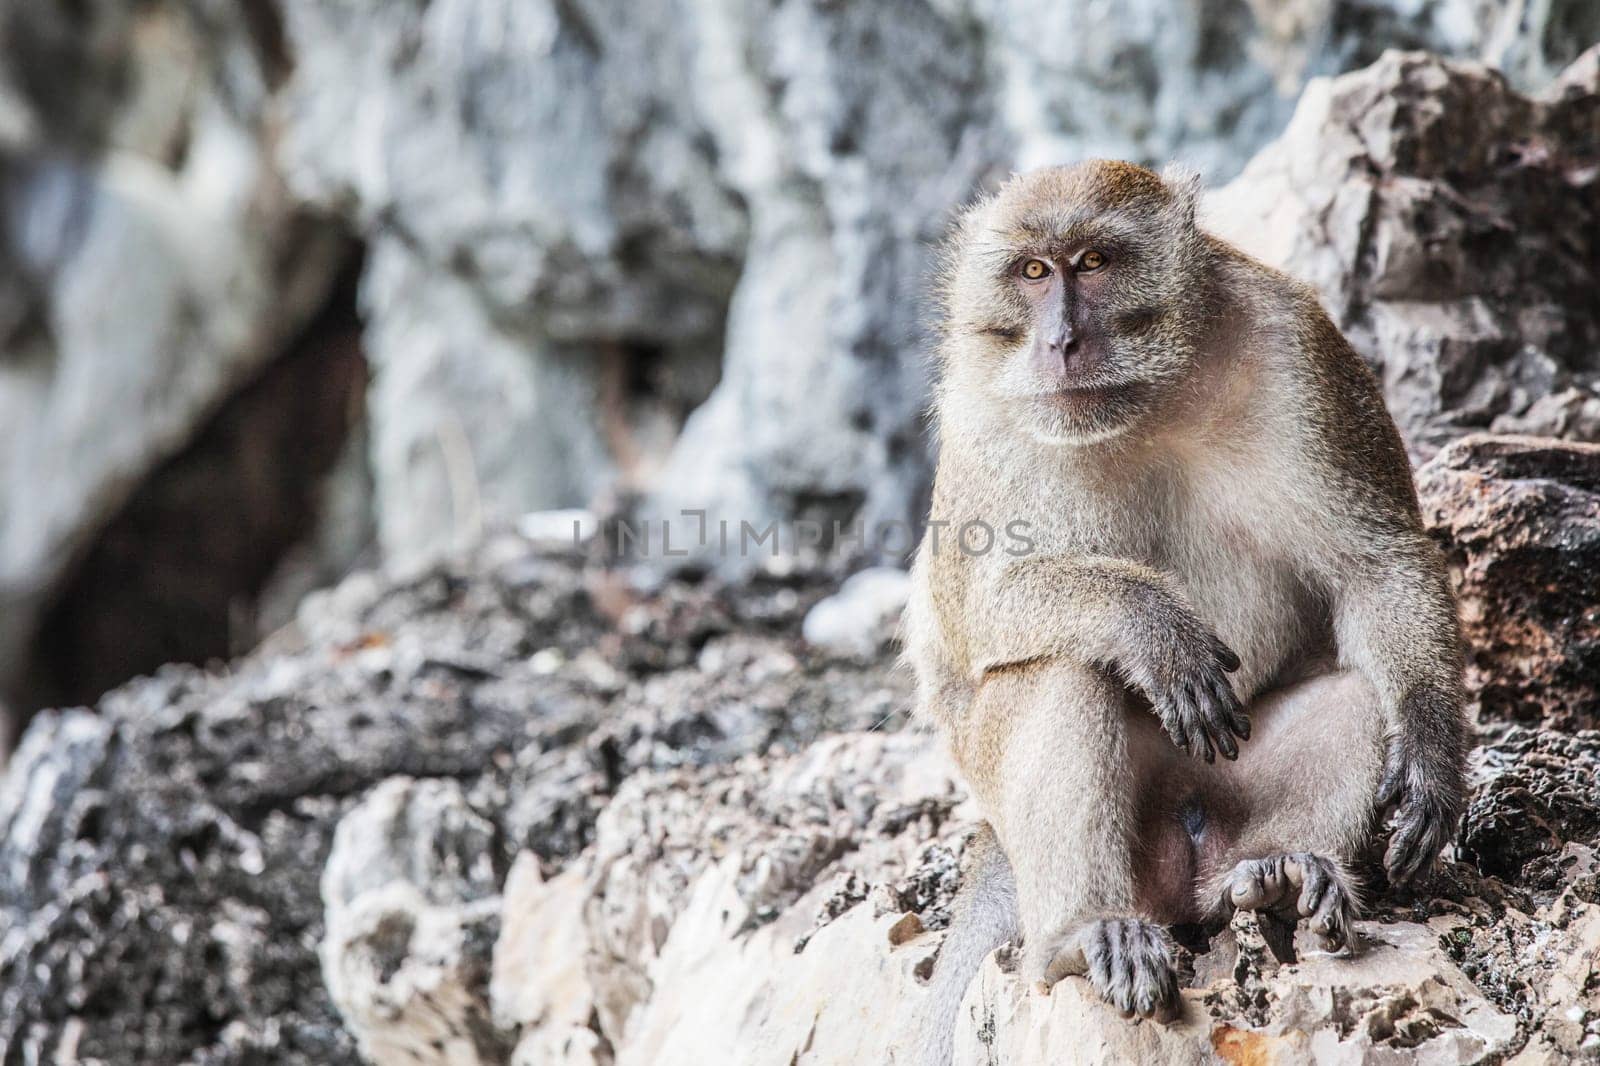 Monkey on rock by Yellowj